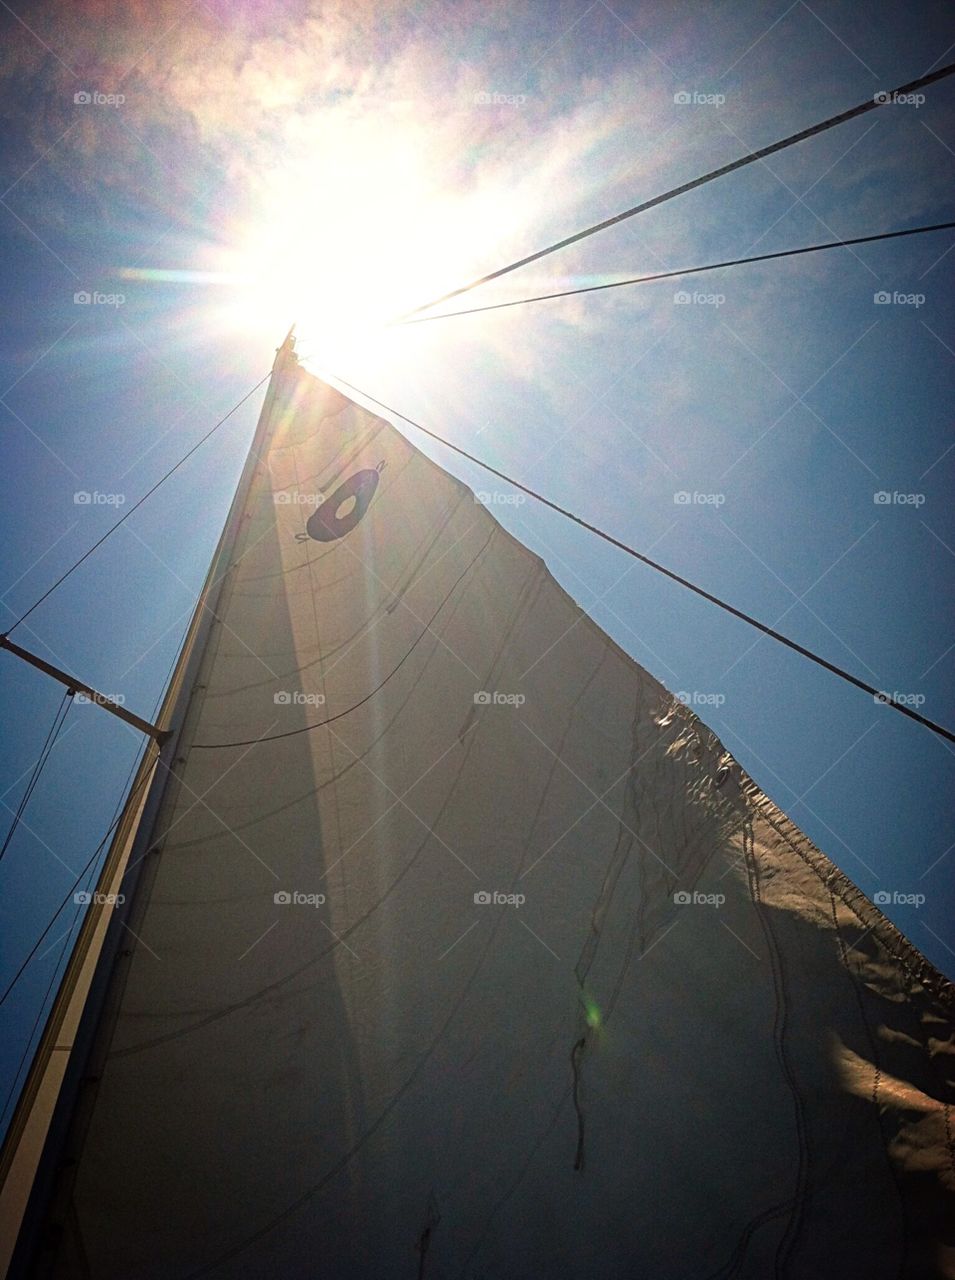 Sail under the sun